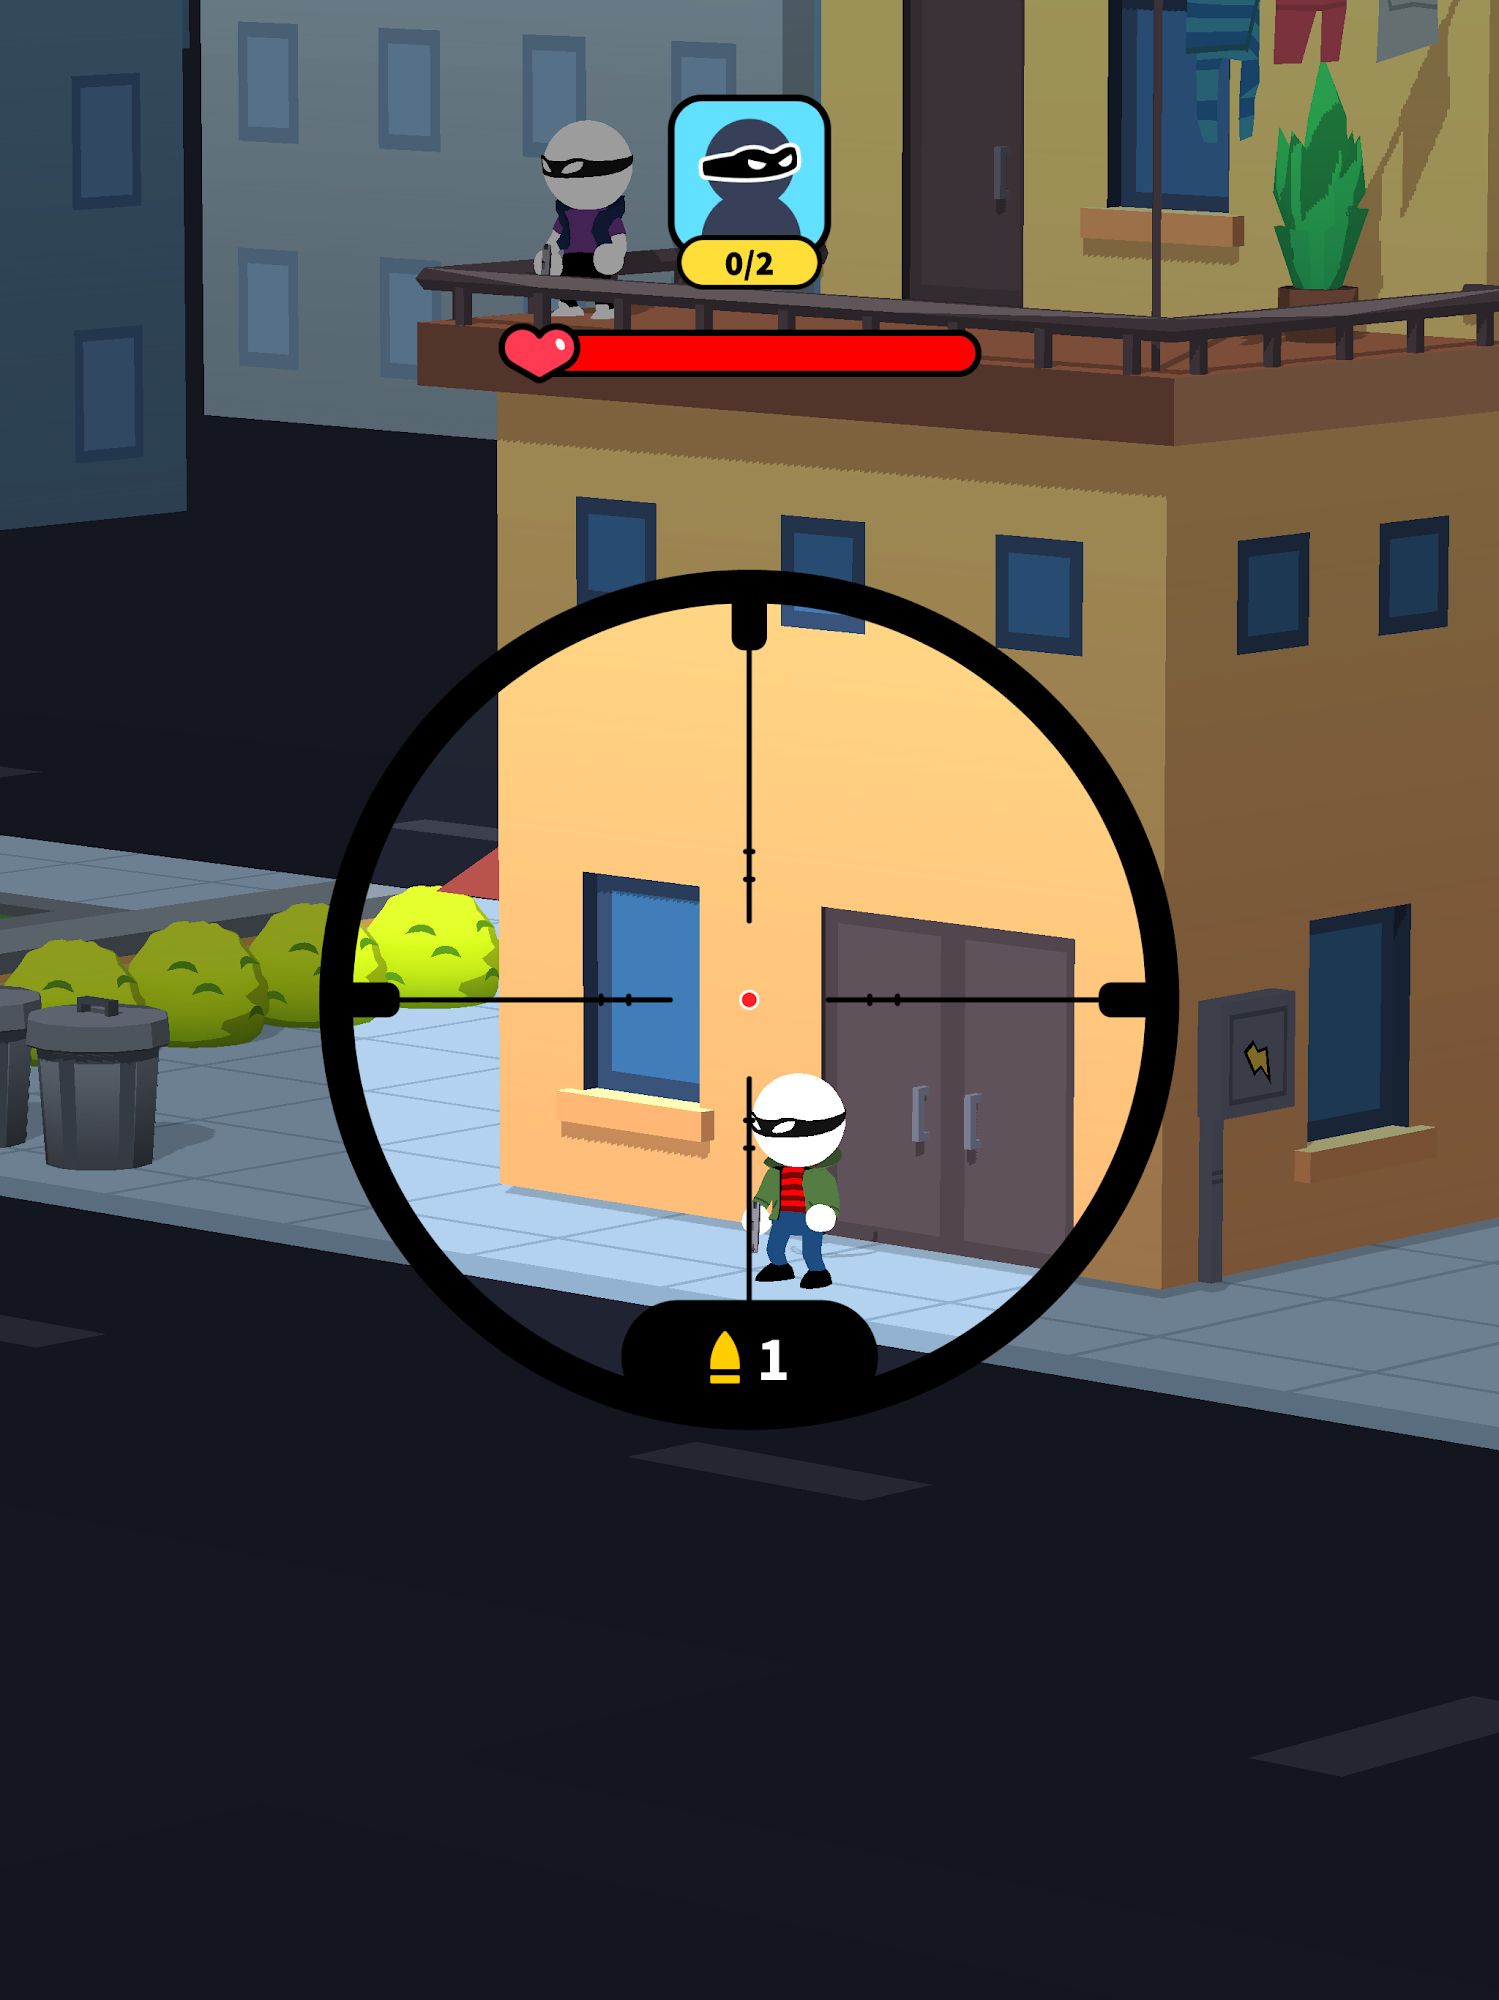 Johnny Trigger - Sniper Game - Click Jogos